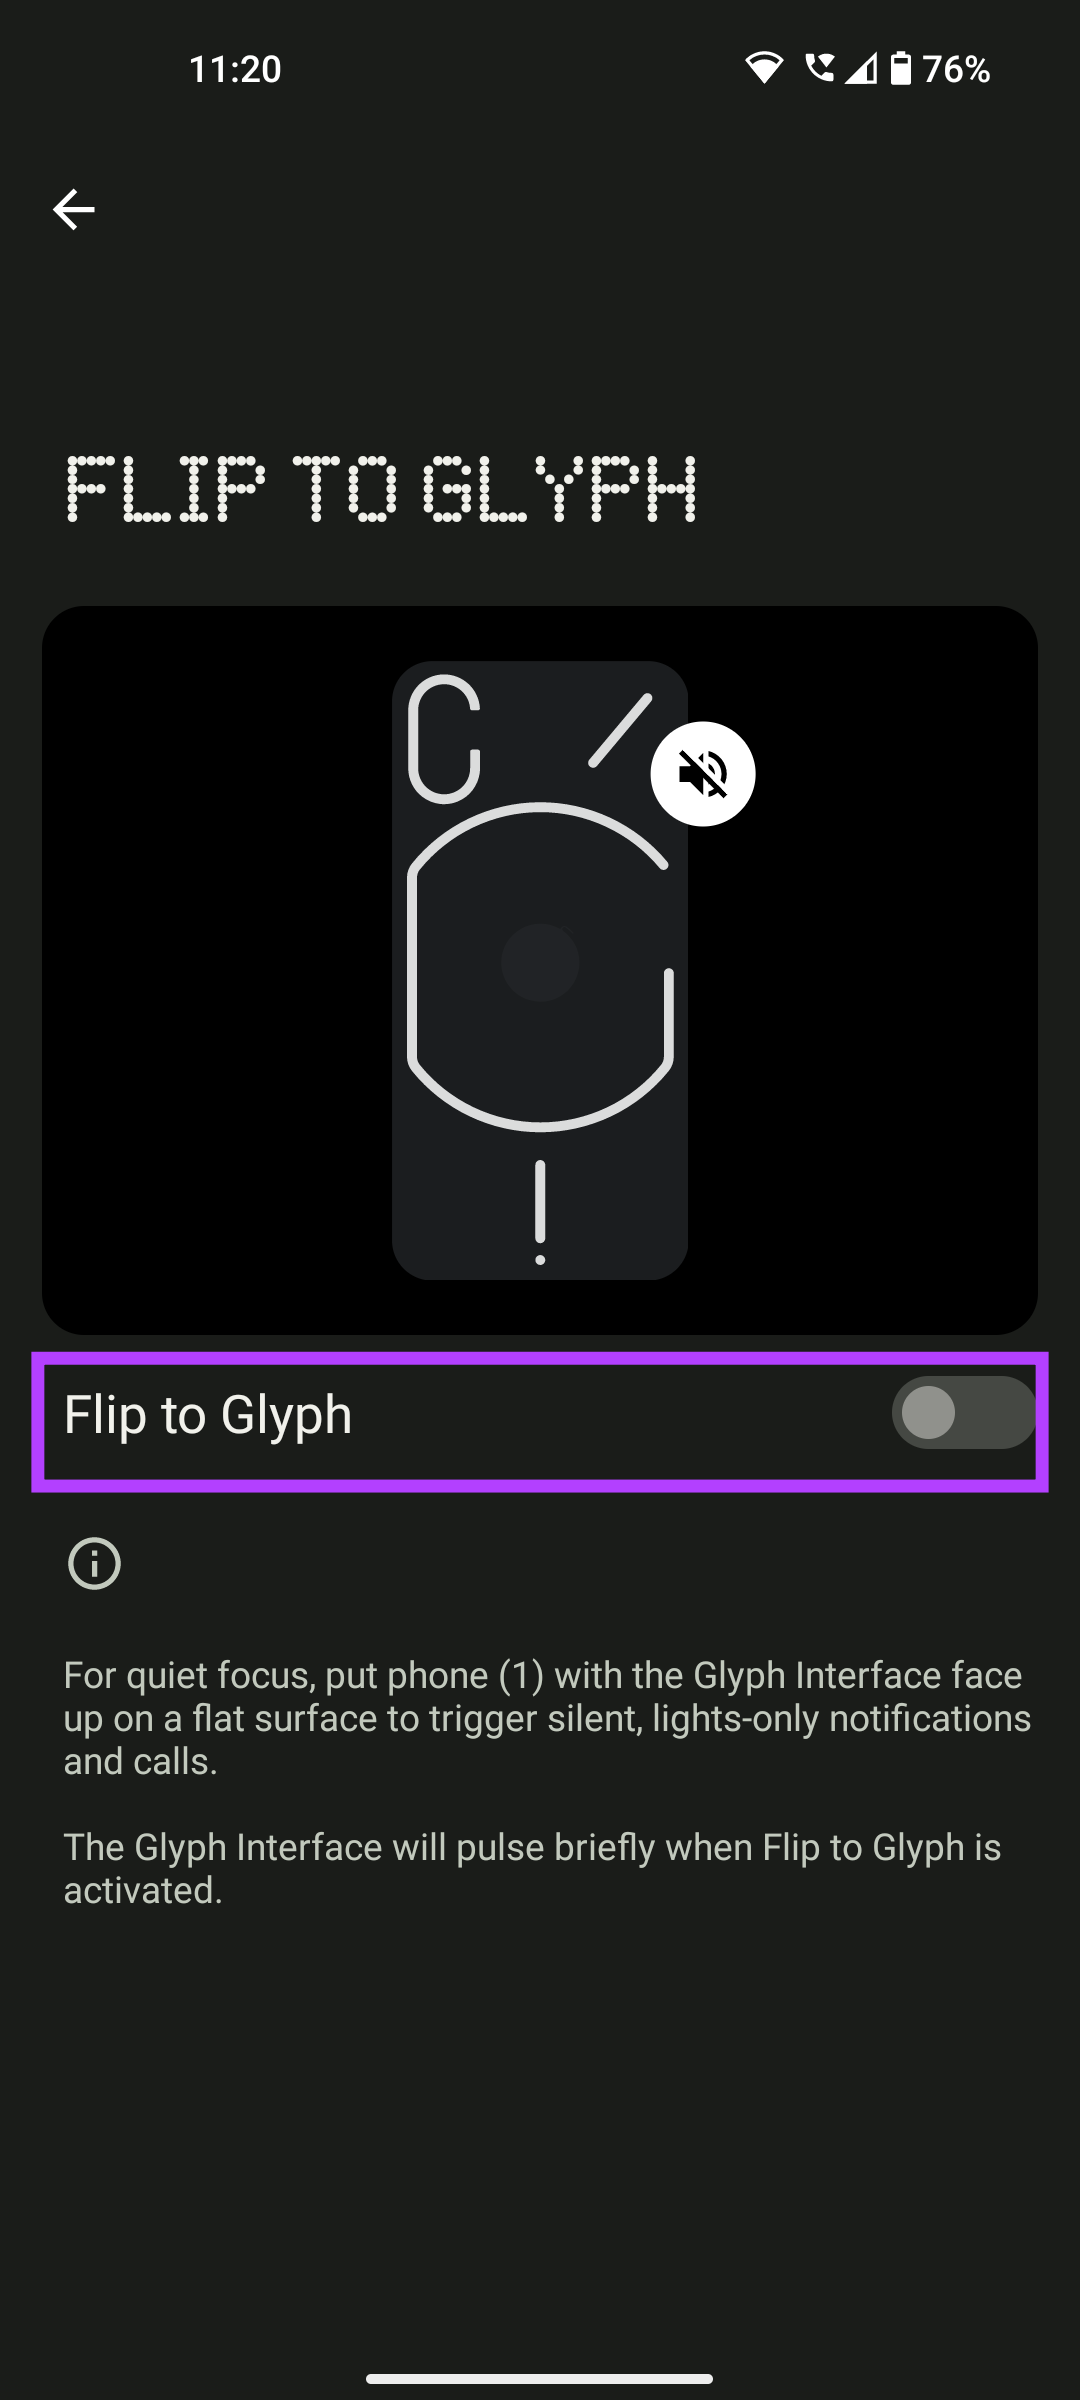 Enable flip to glyph